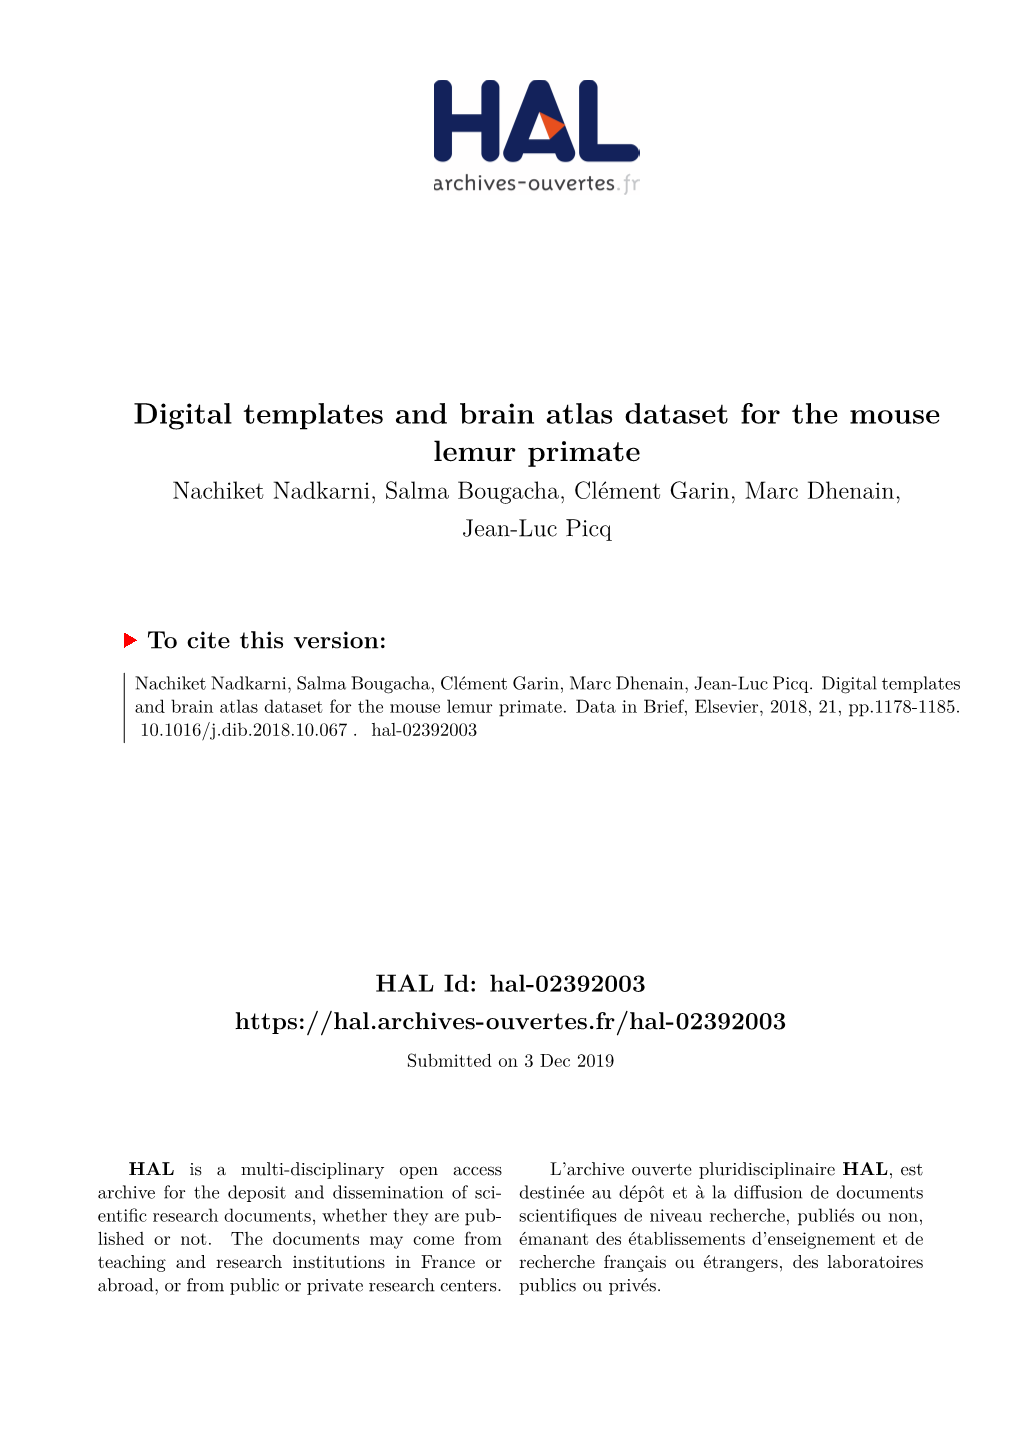 Digital Templates and Brain Atlas Dataset for the Mouse Lemur Primate Nachiket Nadkarni, Salma Bougacha, Clément Garin, Marc Dhenain, Jean-Luc Picq